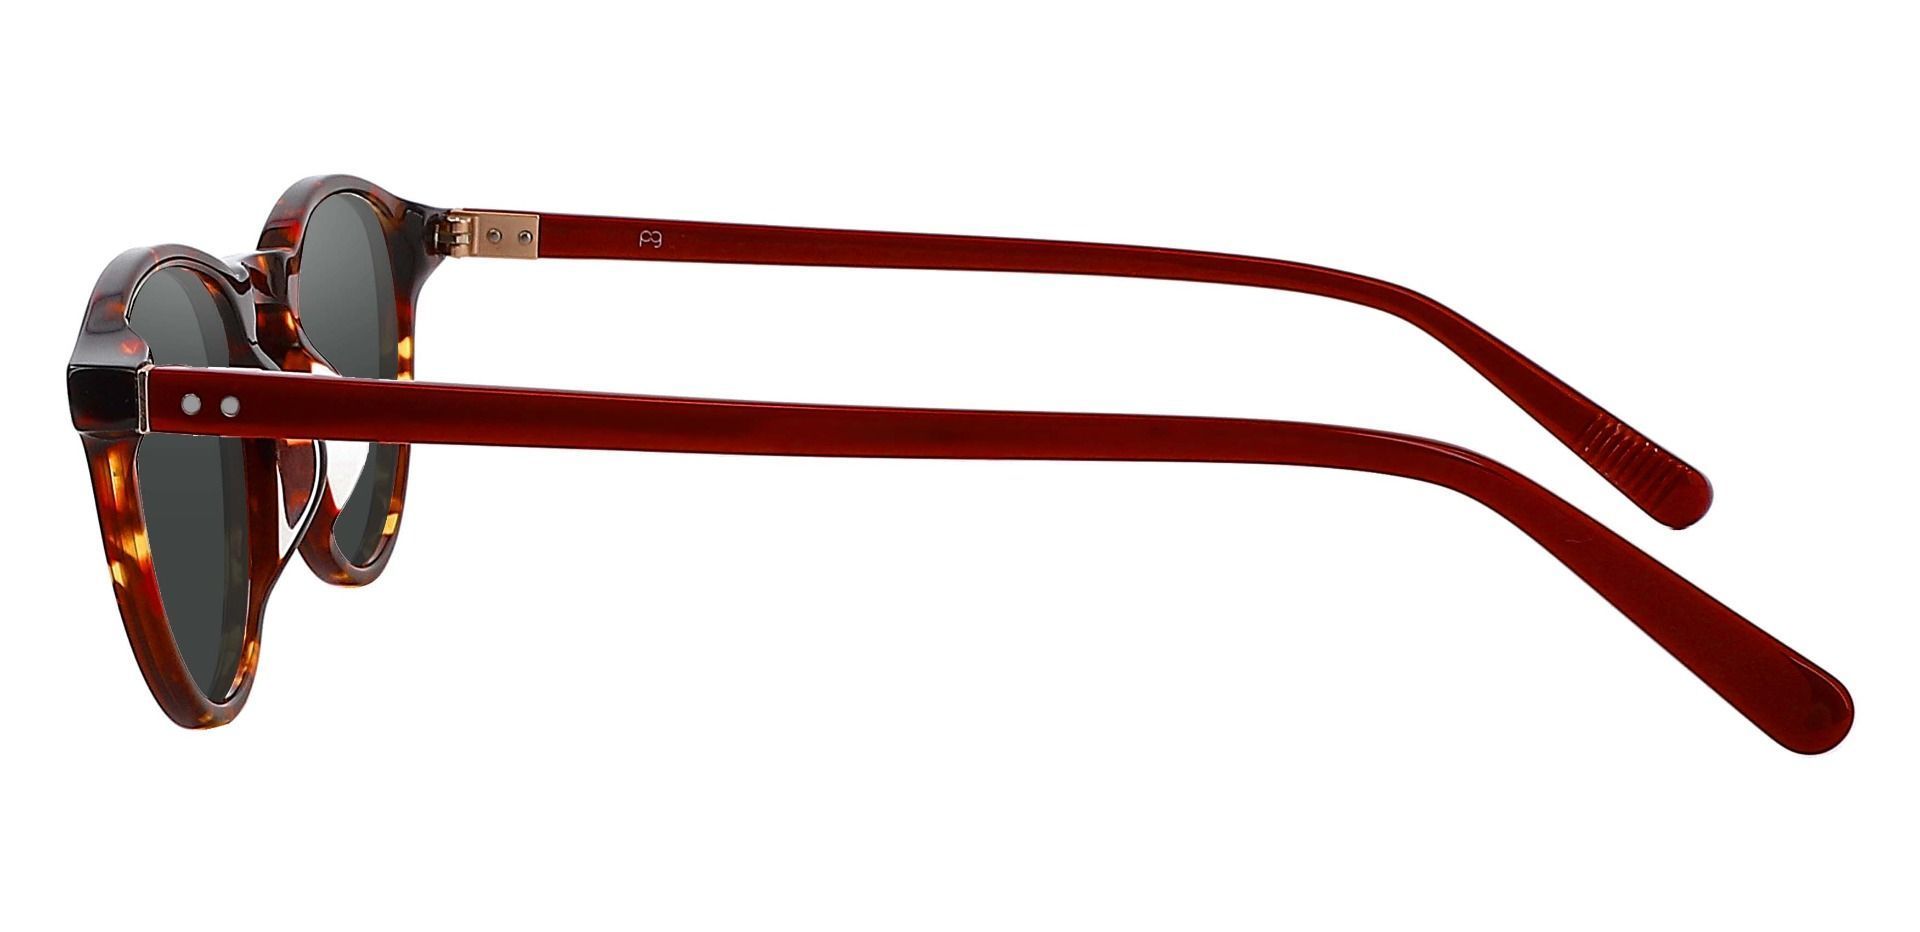 Monarch Oval Progressive Sunglasses - Tortoise Frame With Gray Lenses